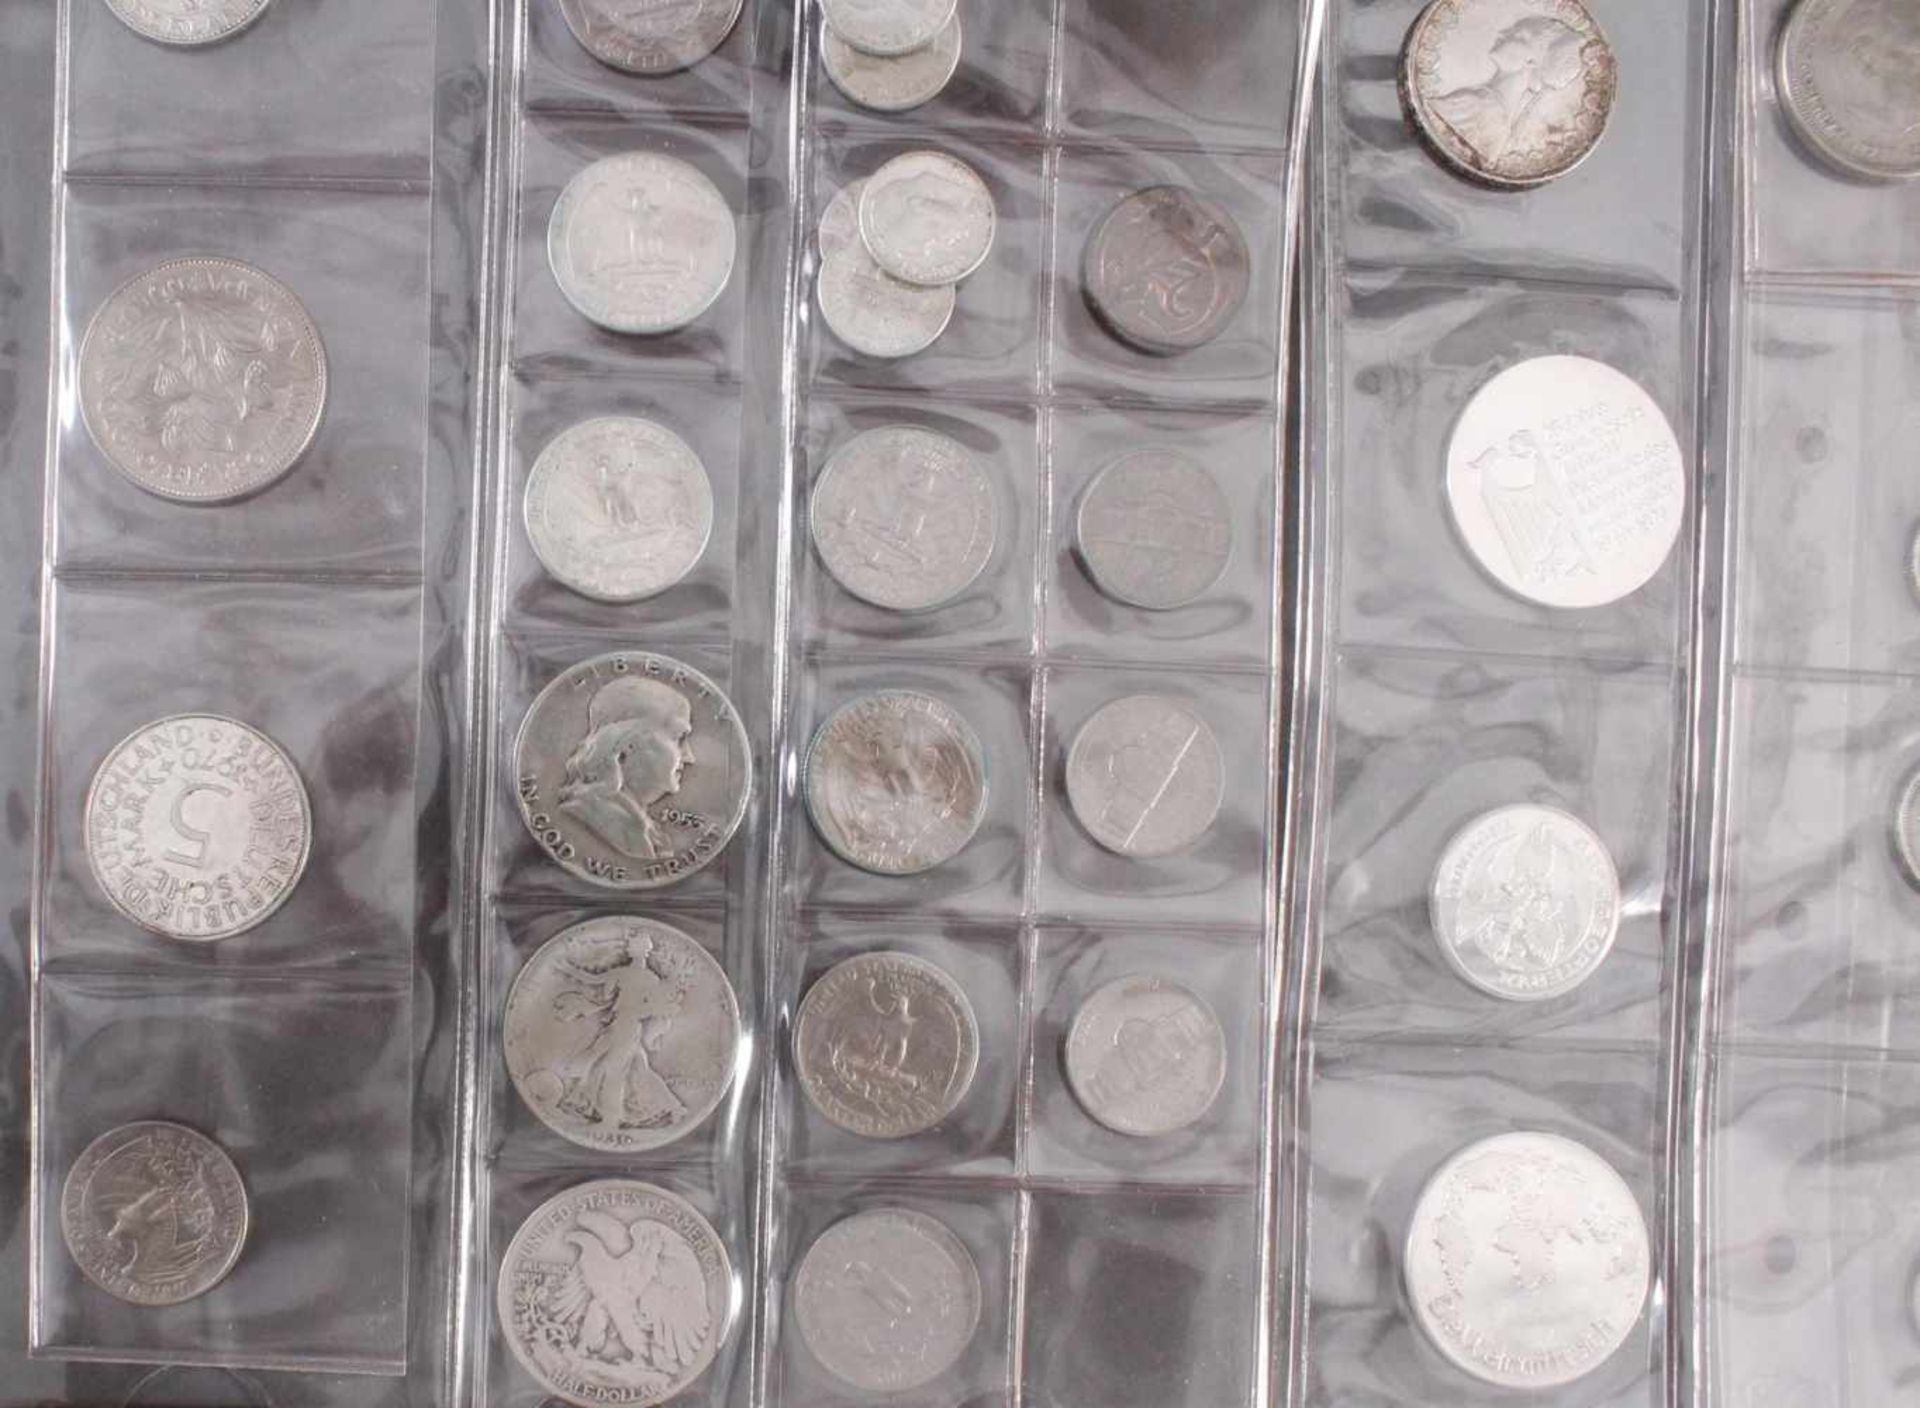 Münzen und Silbermünzen KonvolutDabei USA, 1x Liberty Dollar, 4x Half Dollar, 7x Quarter Dollar, USA - Bild 2 aus 5